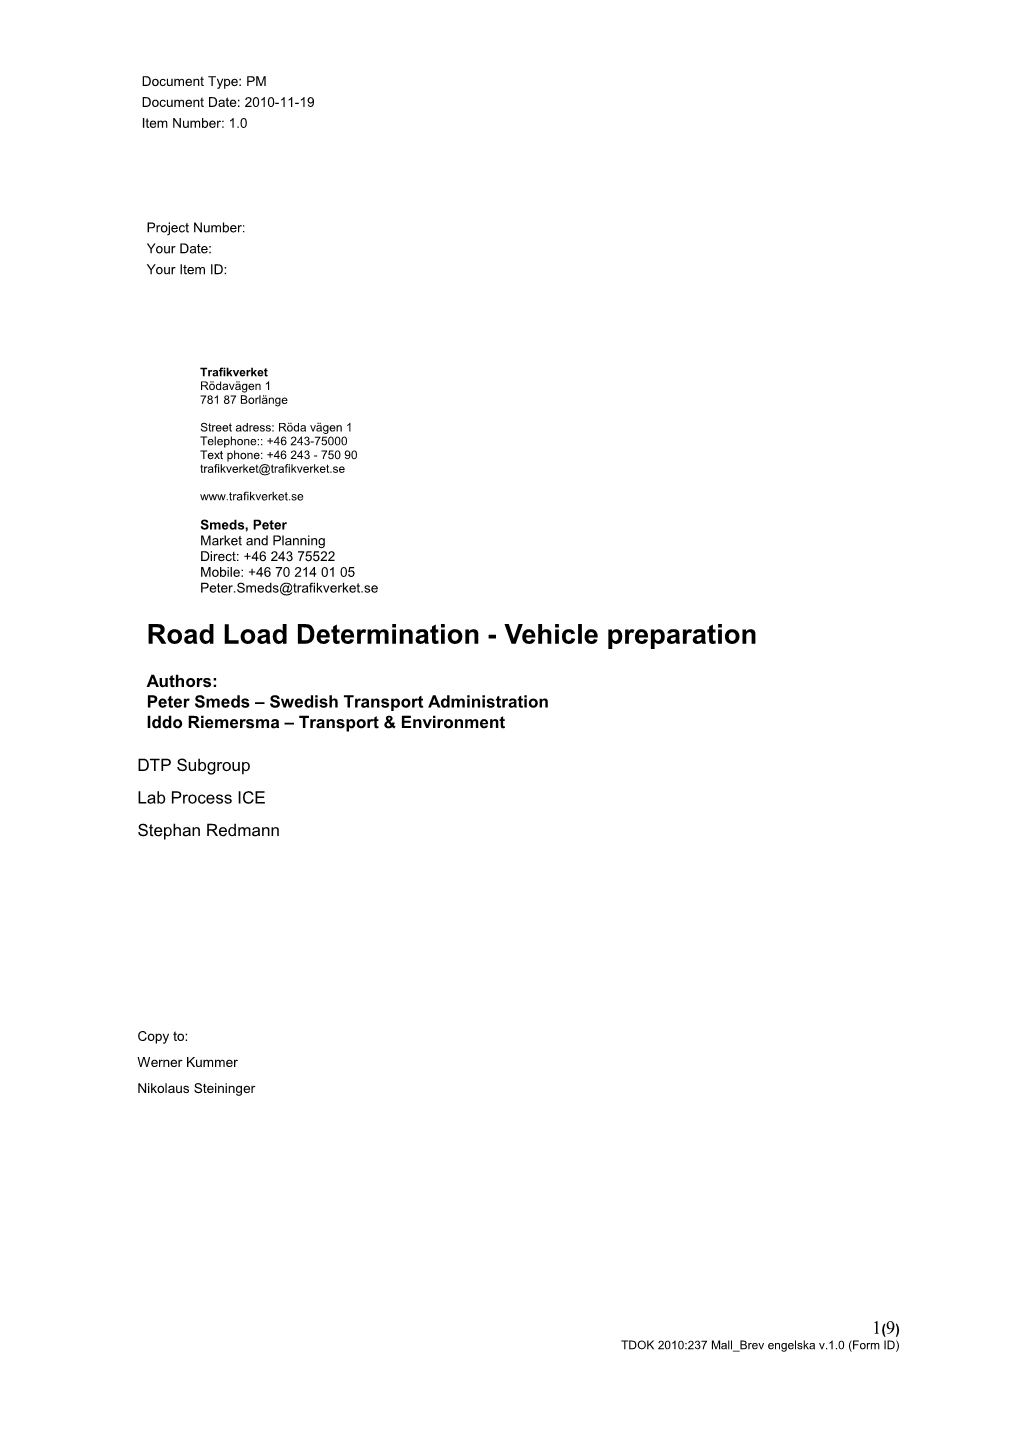 Road Load Determination - Vehicle Preparation